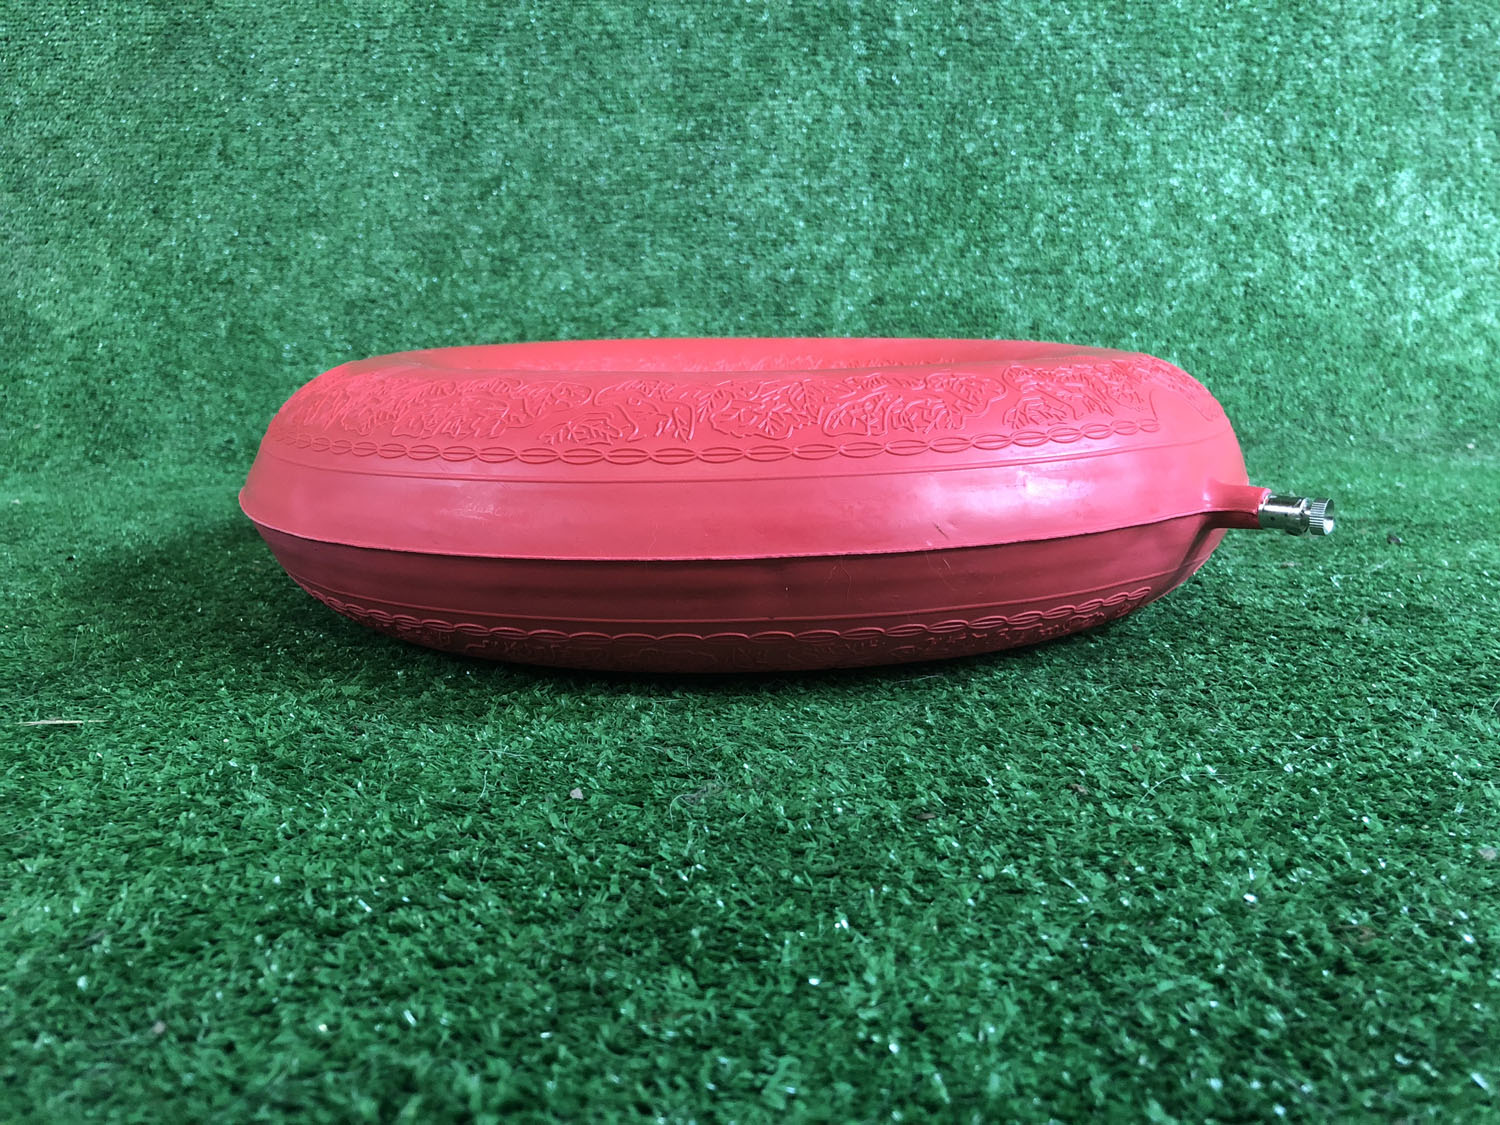 Inflatable Rubber Doughnut Ring Air Pressure Relief Sore Cushion 16" 41cm